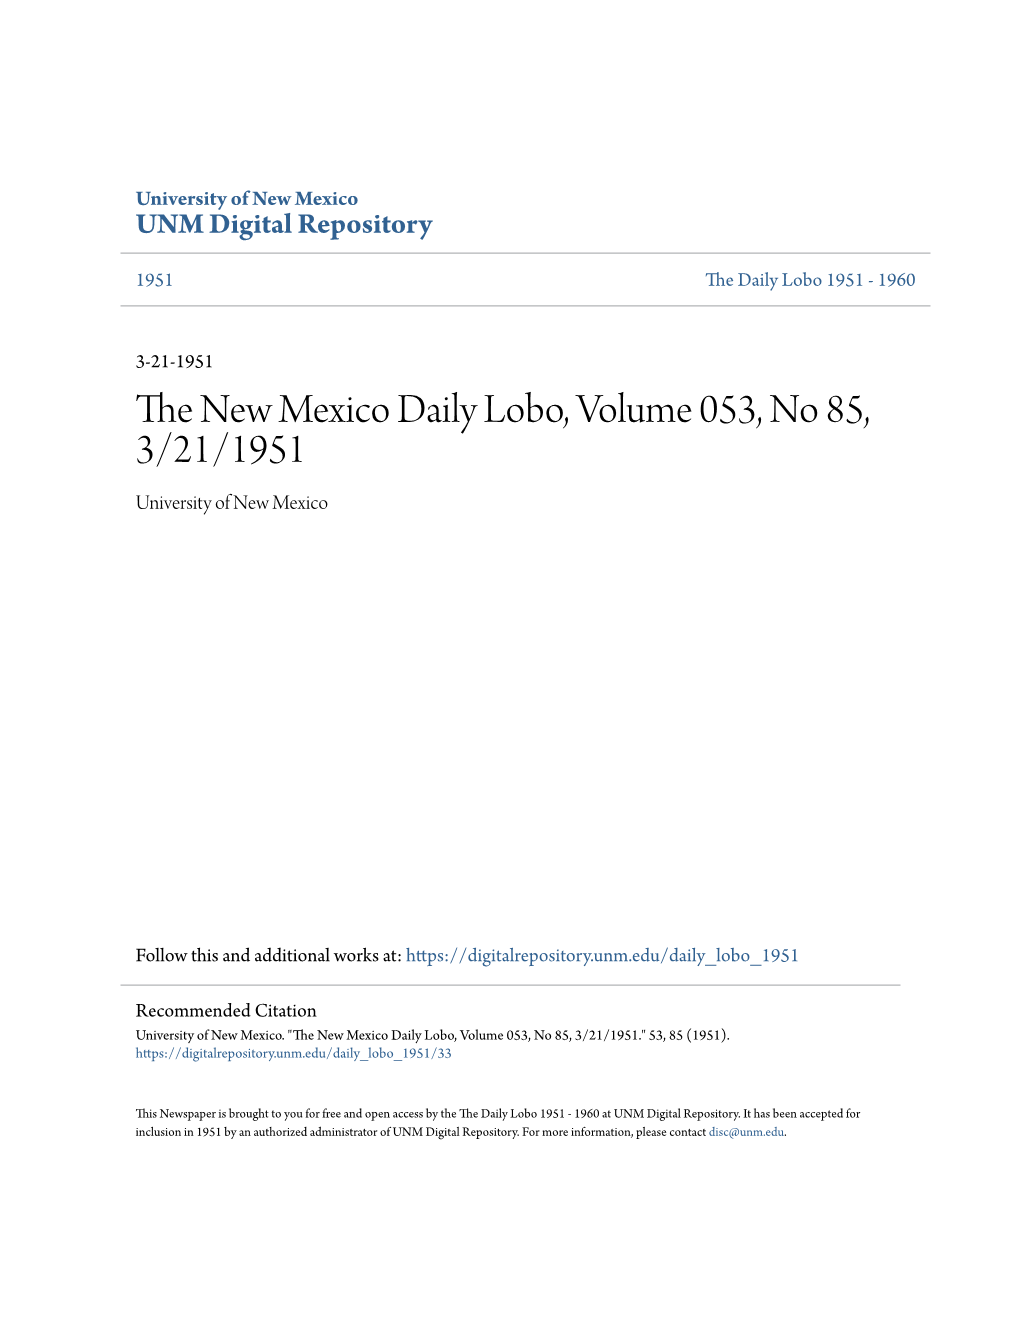 The New Mexico Daily Lobo, Volume 053, No 85, 3/21/1951